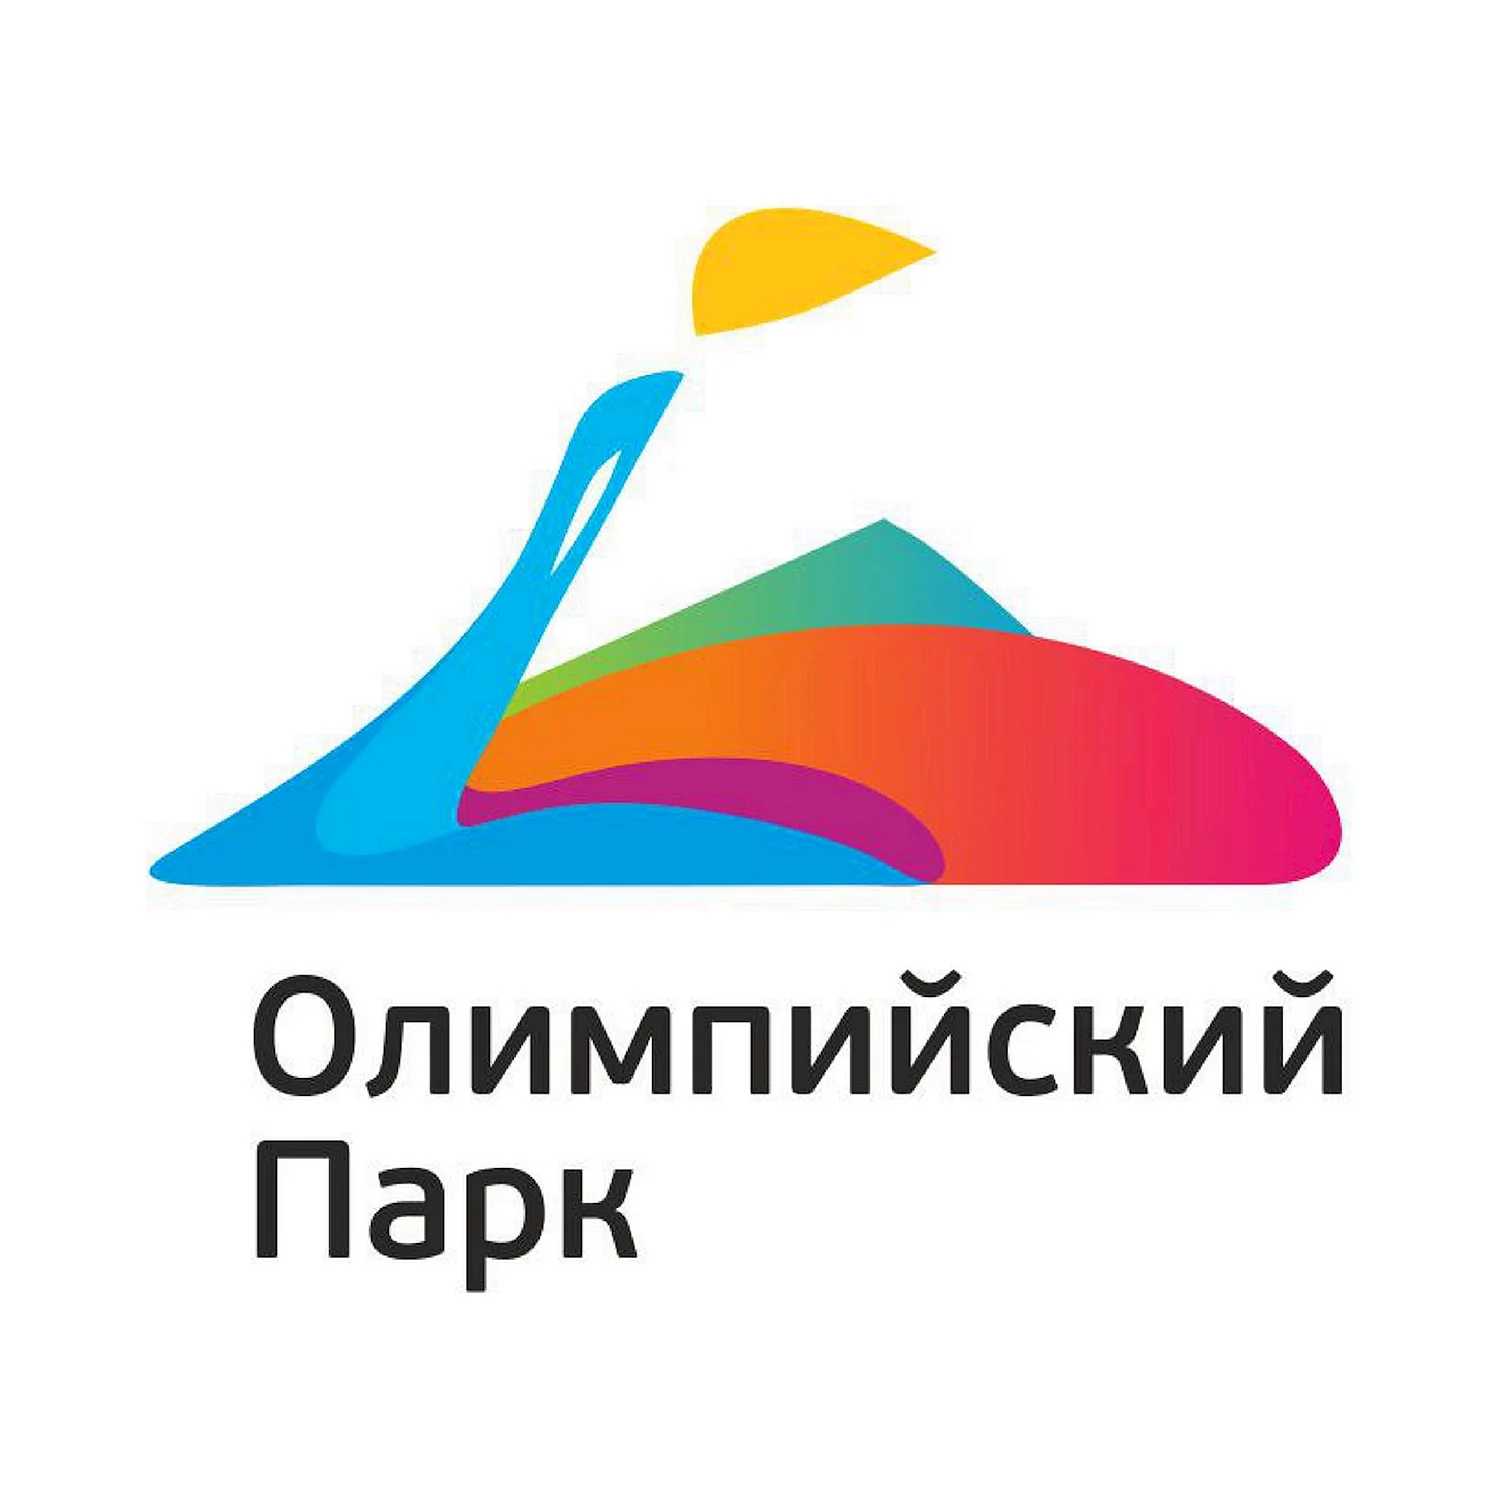 Олимпийский парк логотип